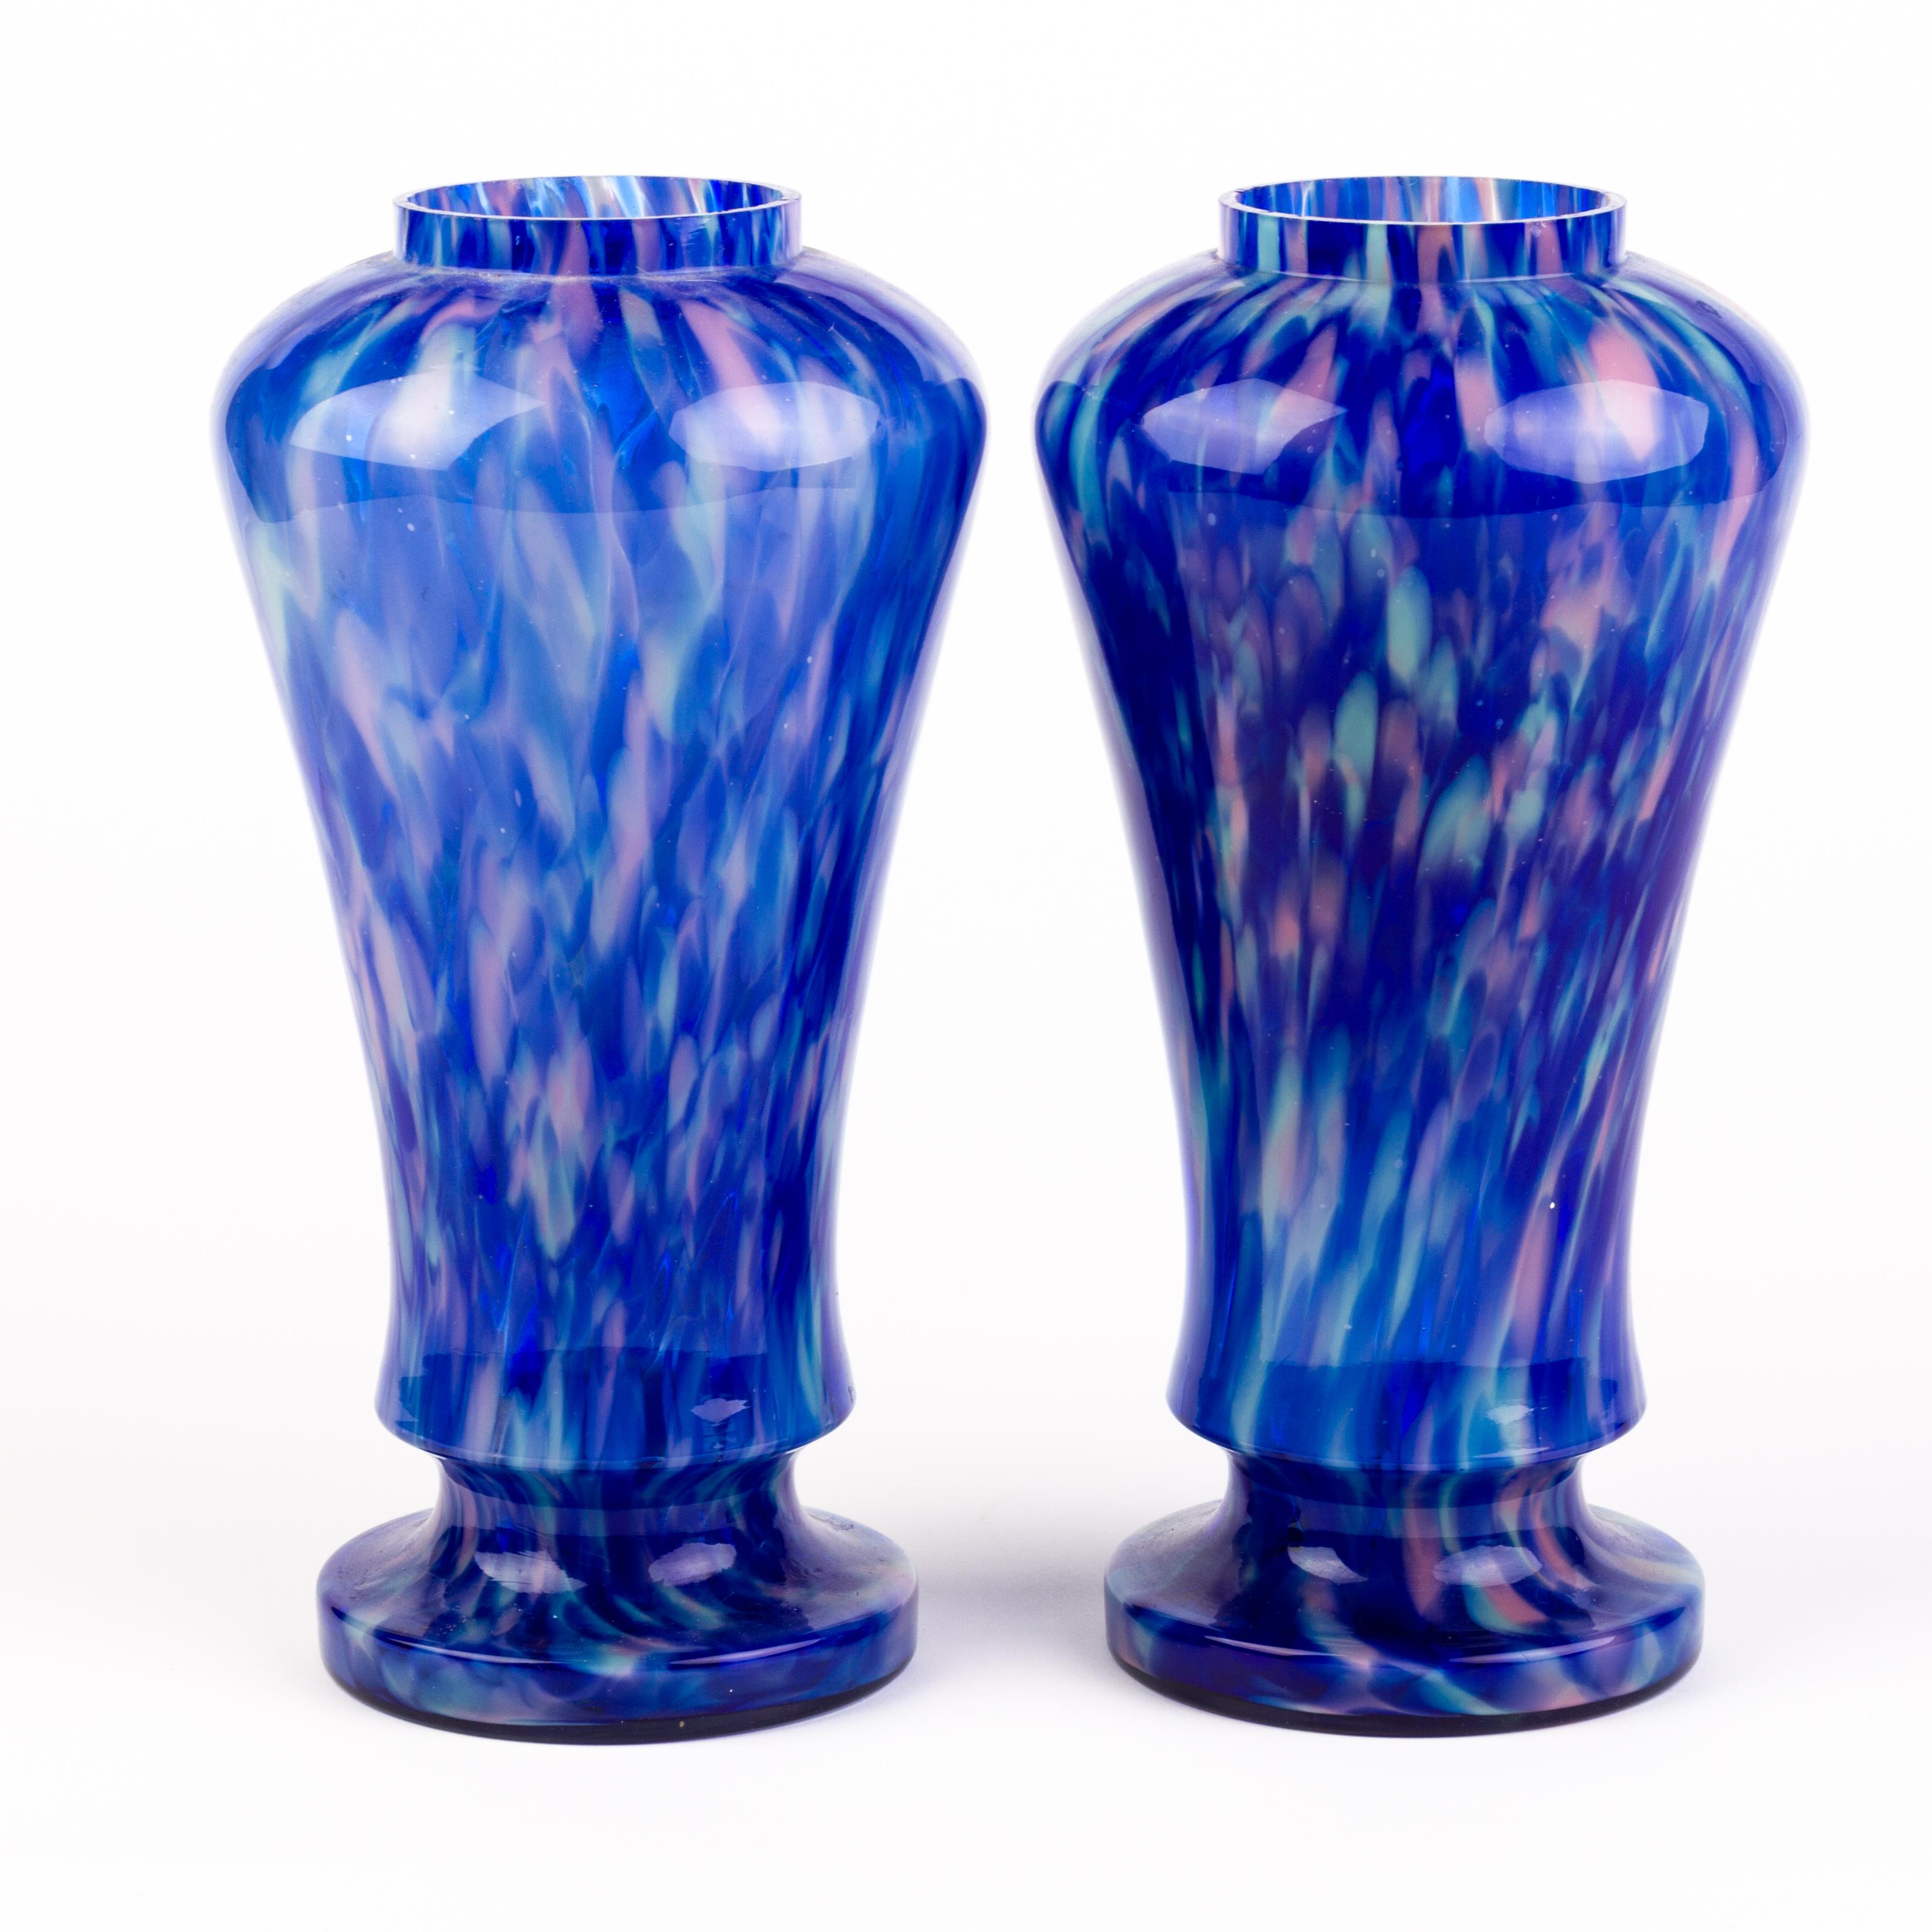 Pair of Mid-Century Italian Murano Venetian Splatter Blue Glass Baluster Vases
Good condition
Free international shipping.